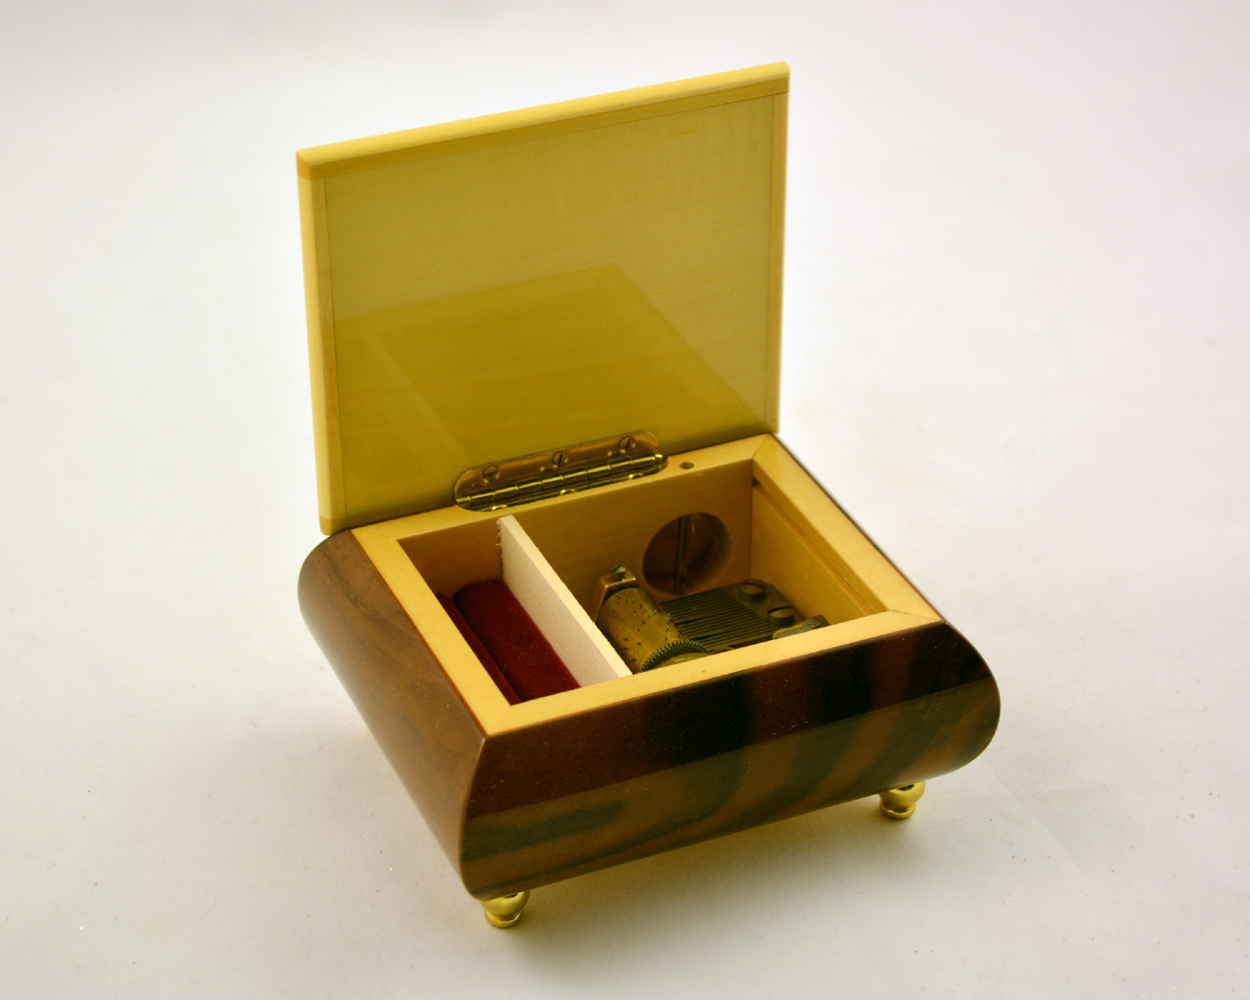 High Gloss music box with violin inlay